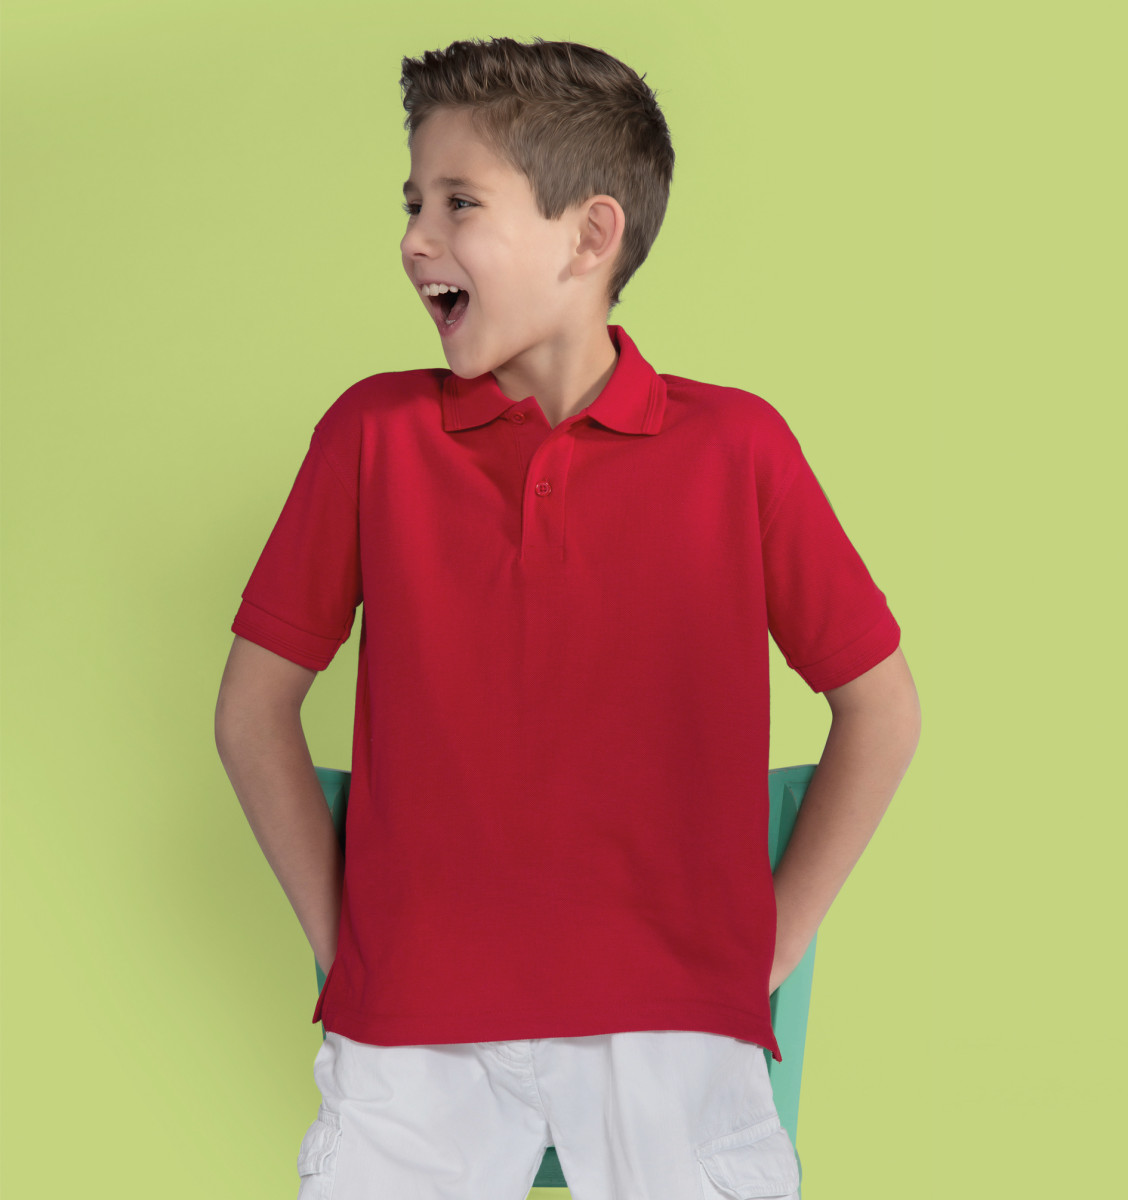 Kid's Polycotton Polo Shirt